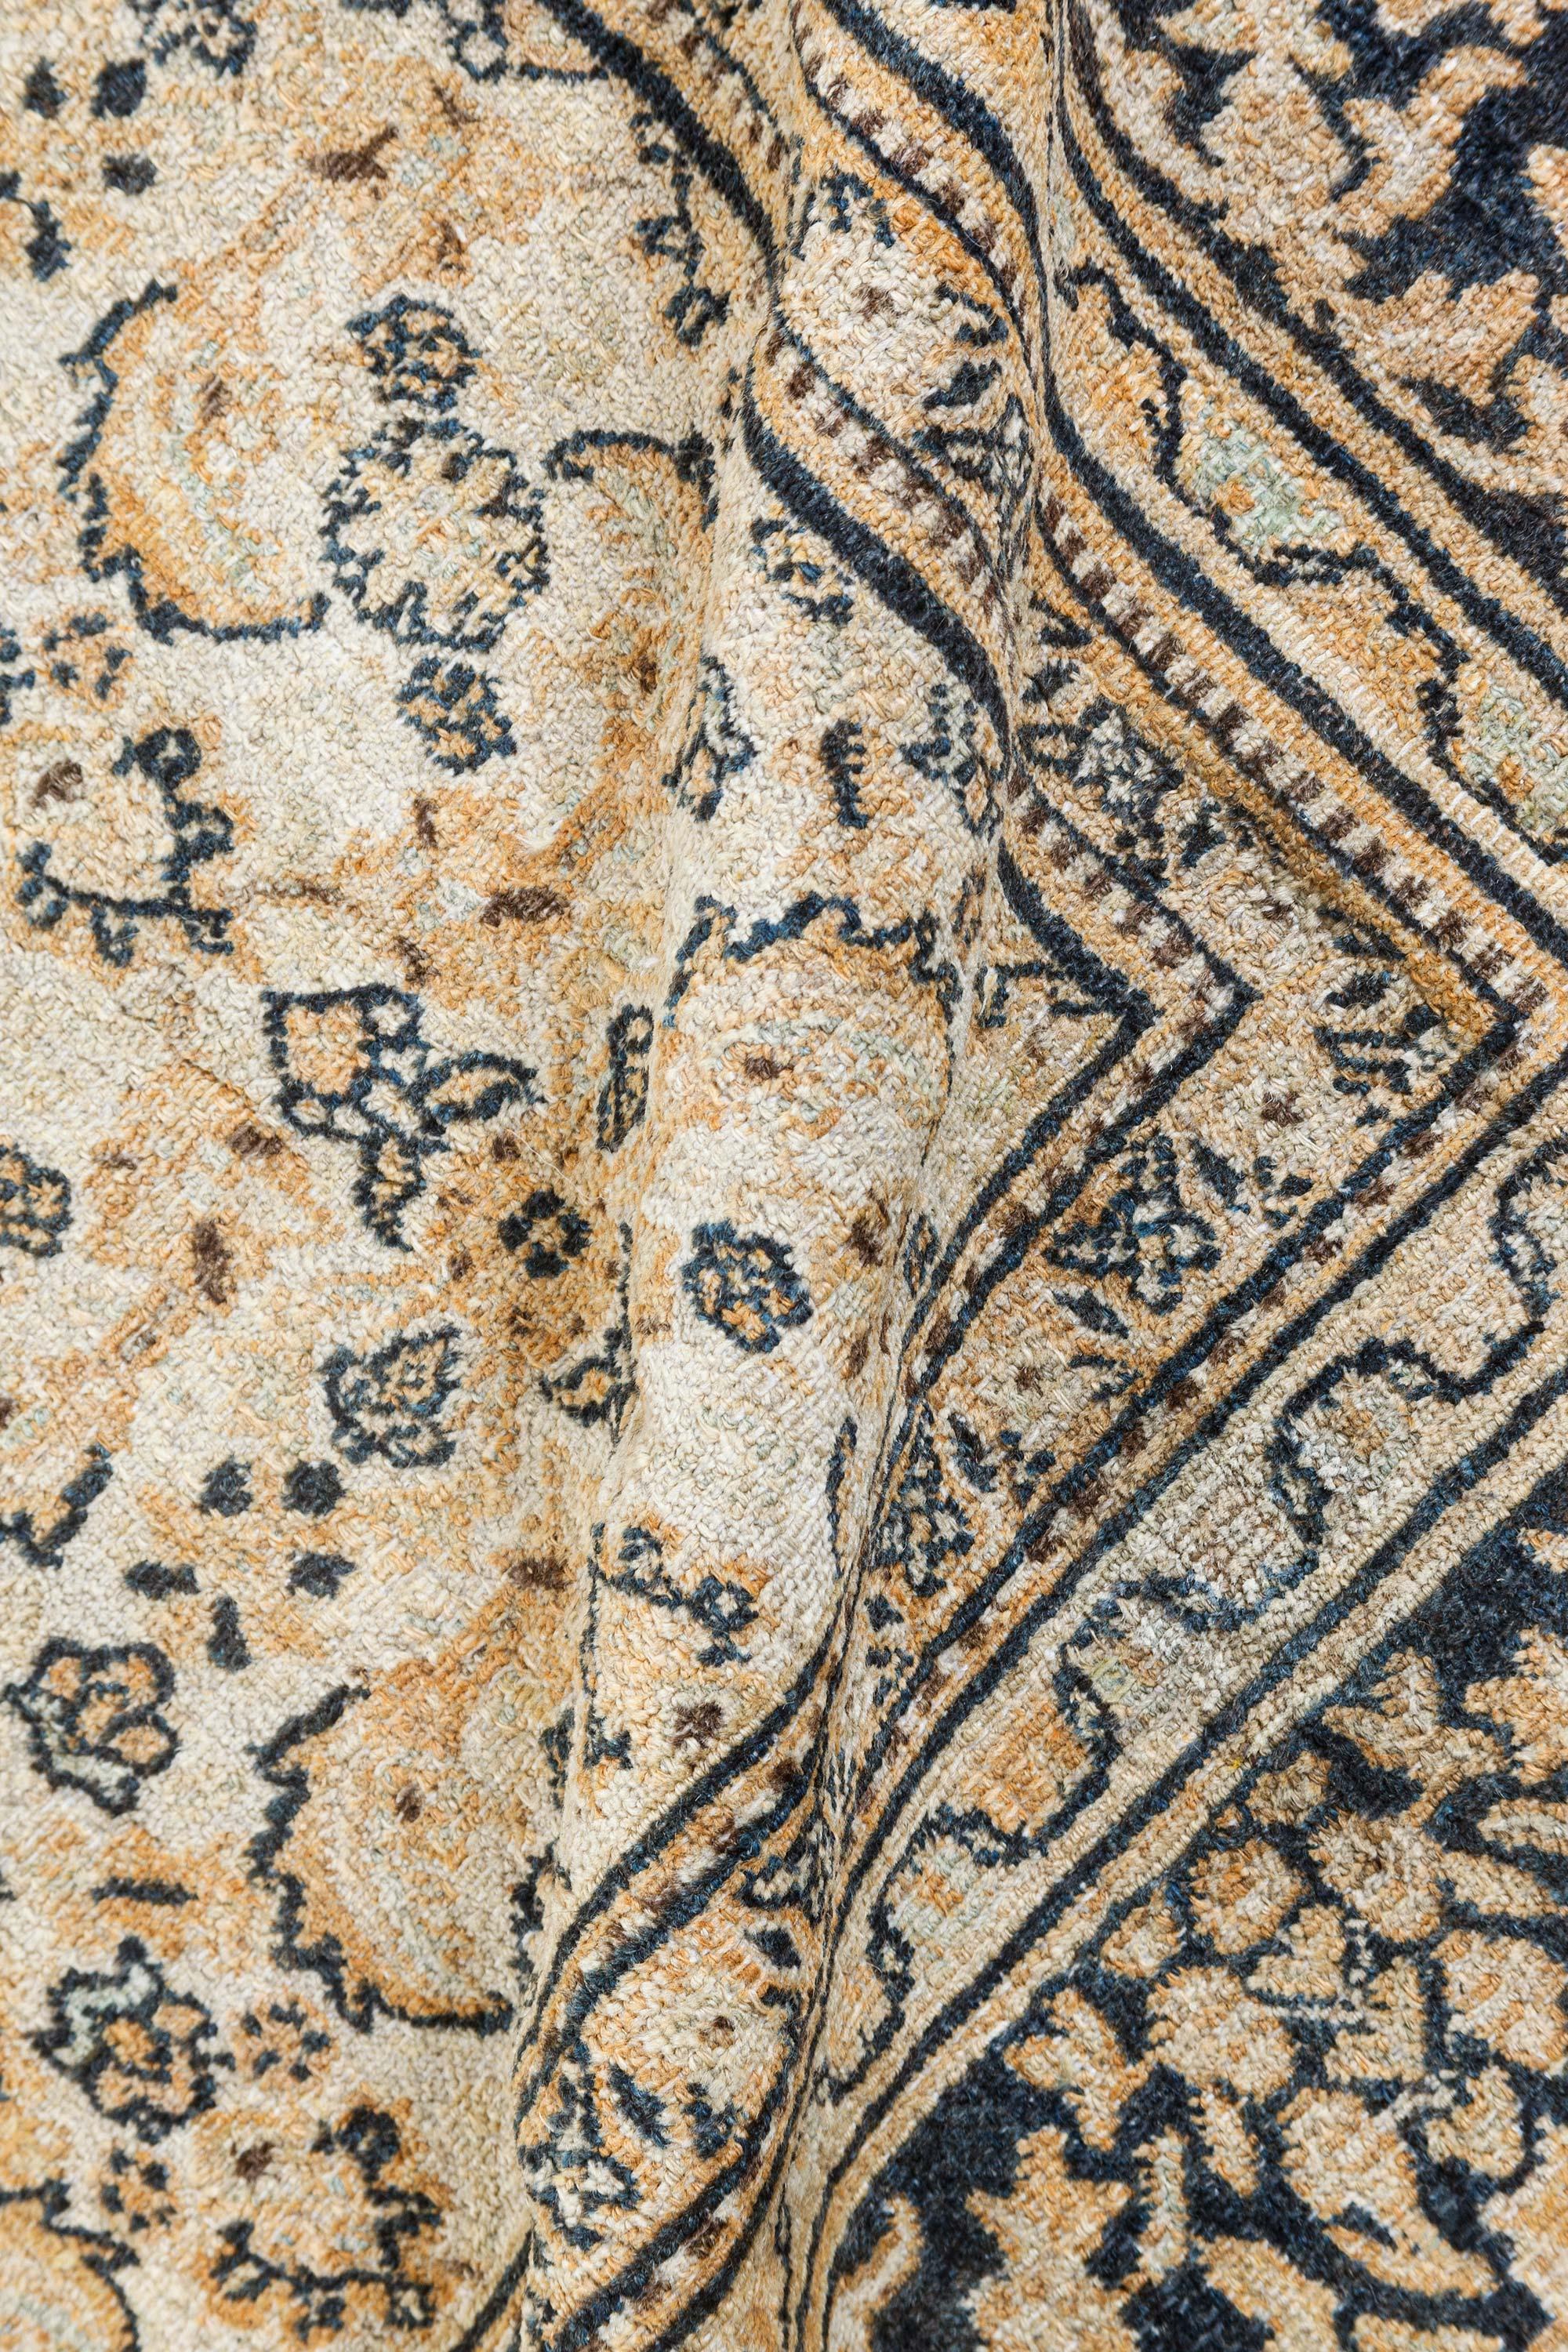 Authentic 19th century Persian Meshad handmade wool carpet
Size: 13'2